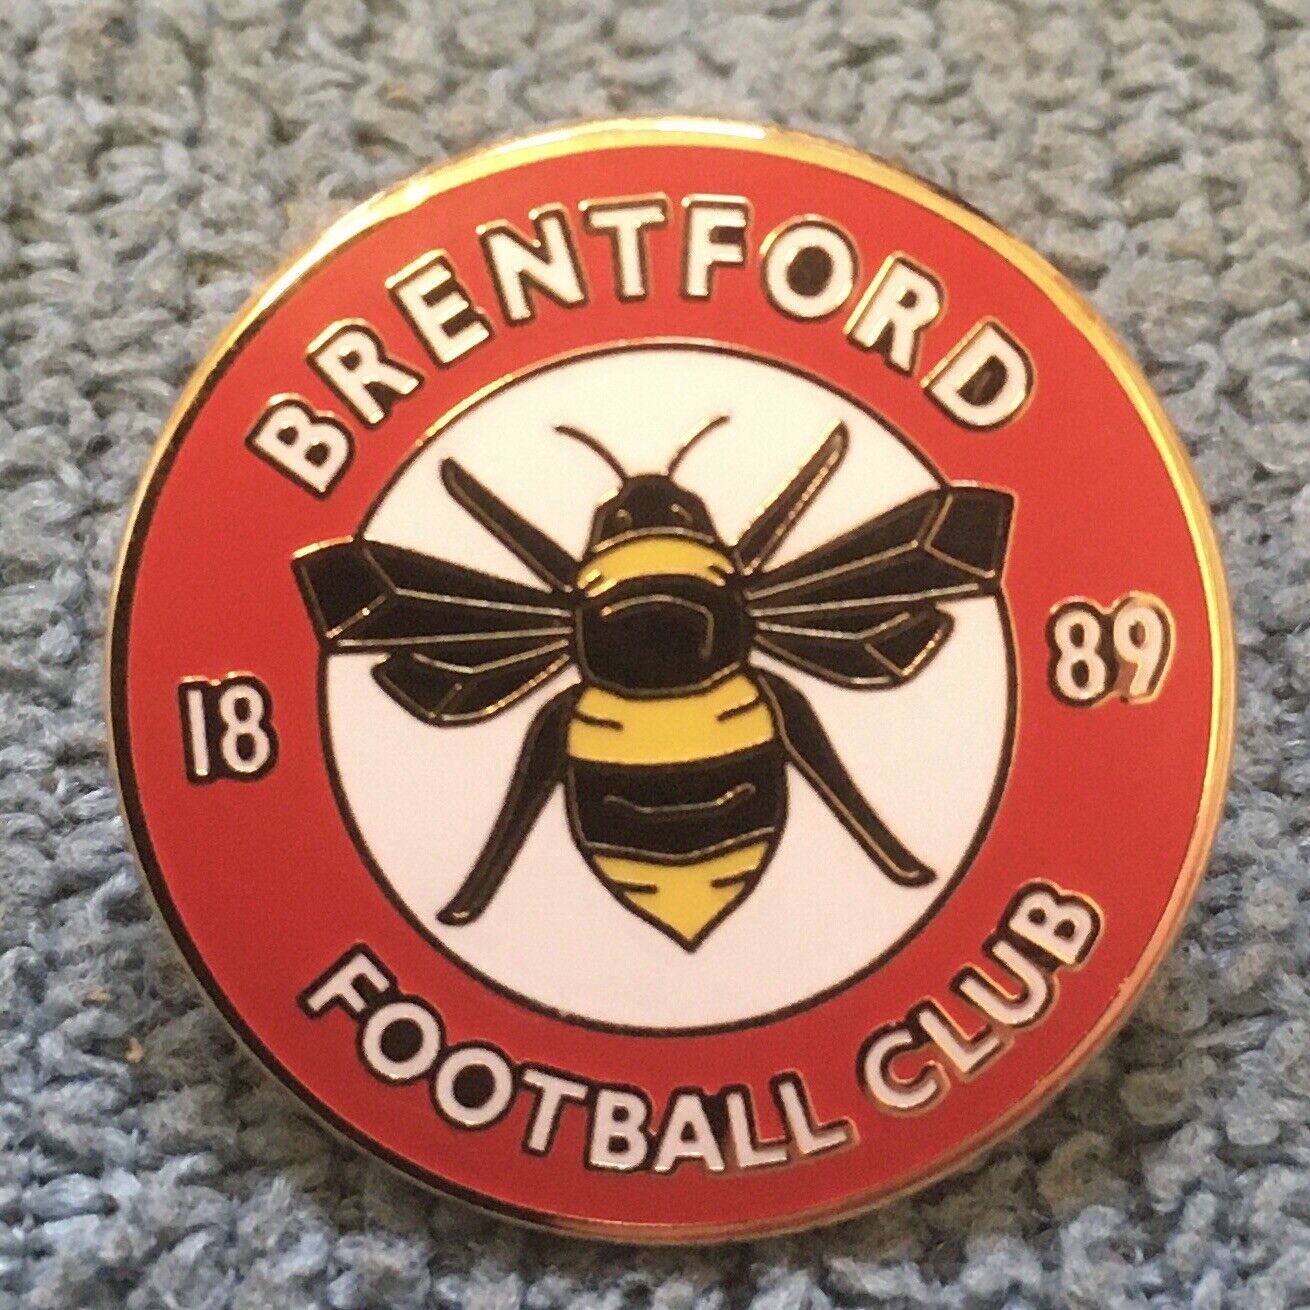 Brentford new badge